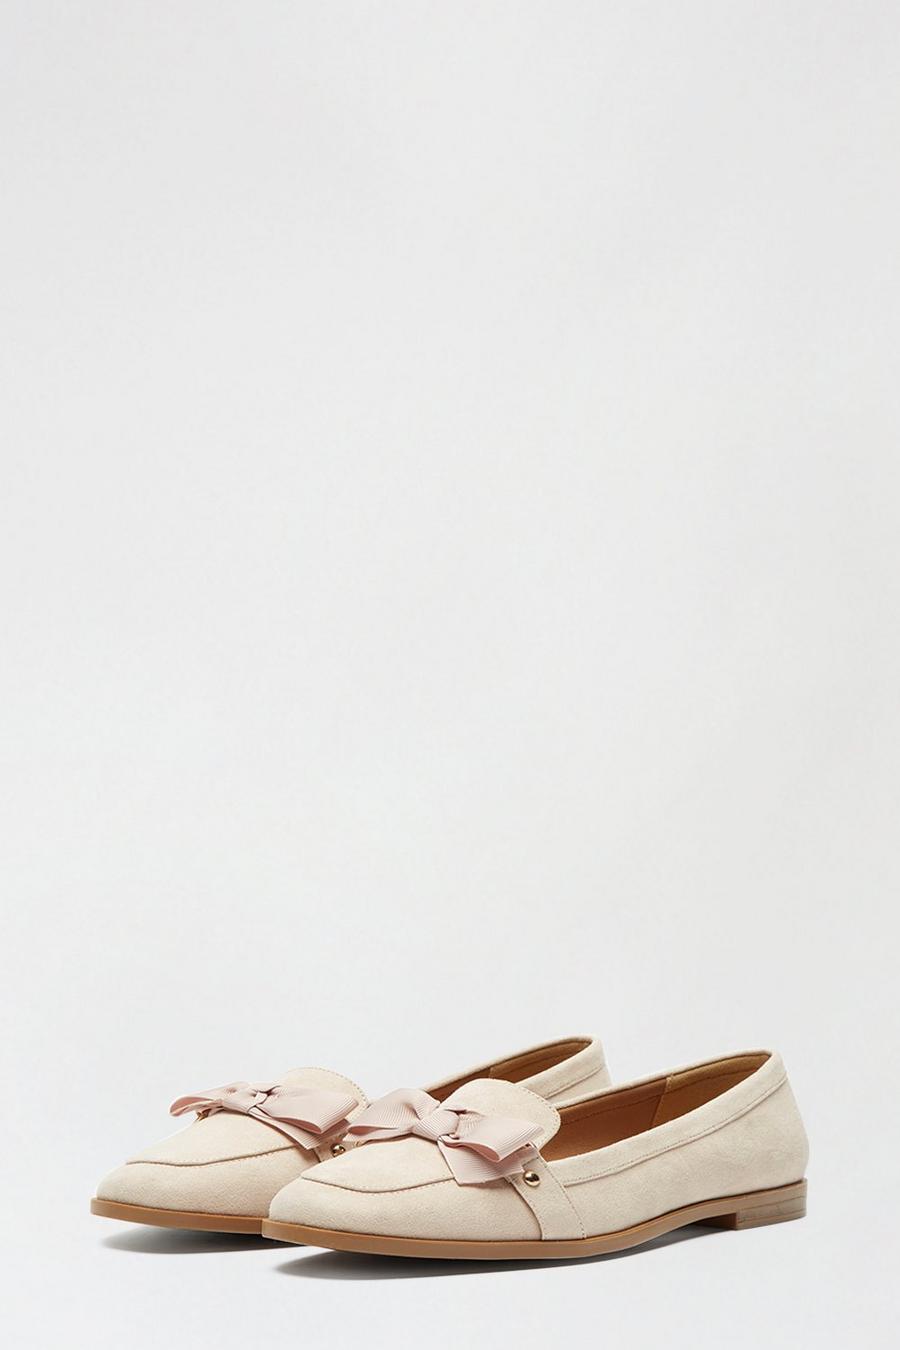 Pump Shoes | Women's Ballet Pump Shoes | Dorothy Perkins